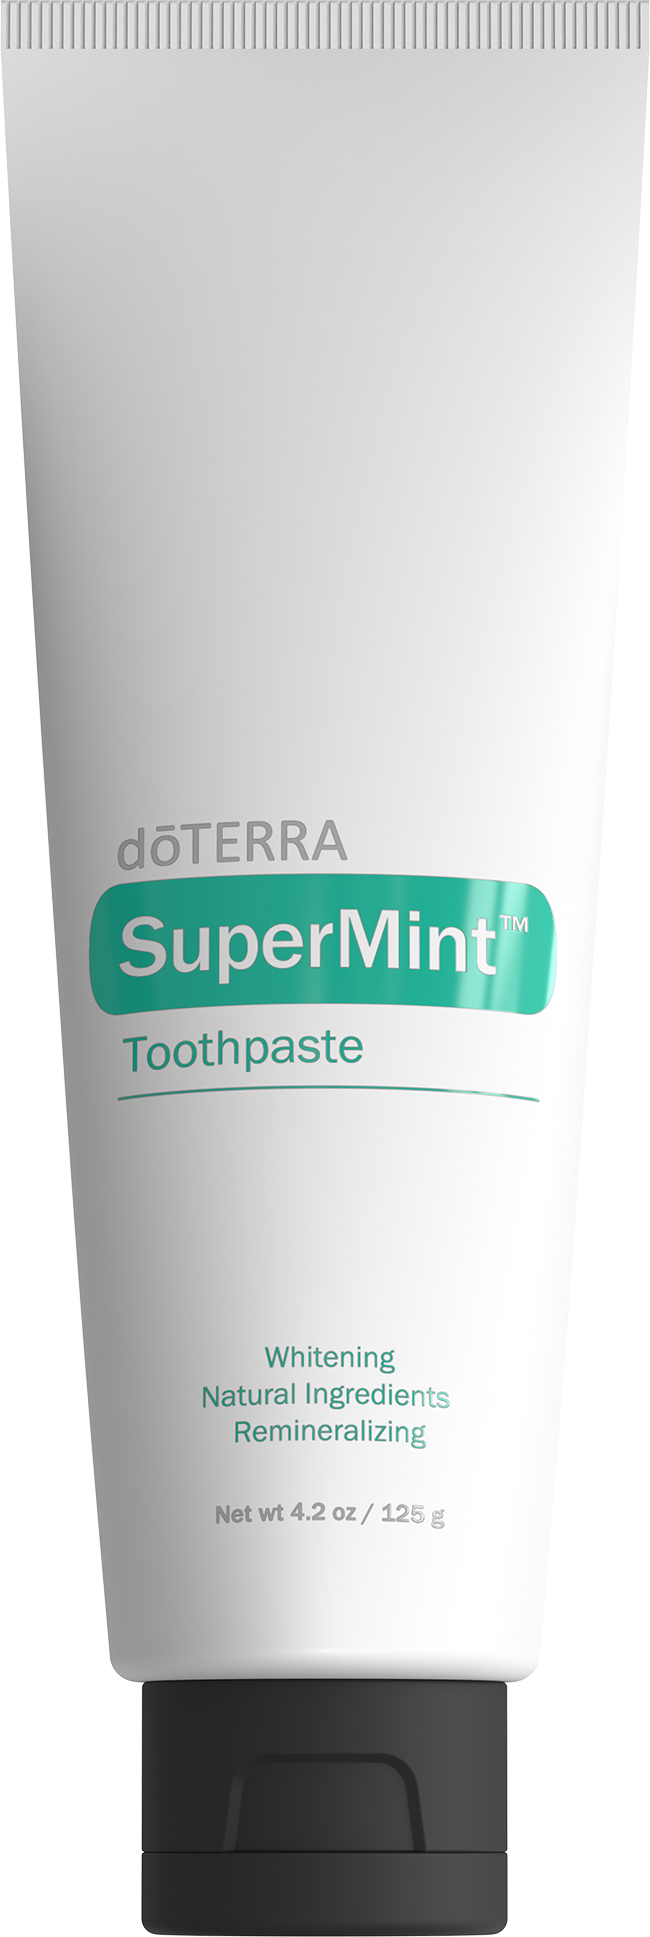 dōTERRA SuperMint™ Toothpaste